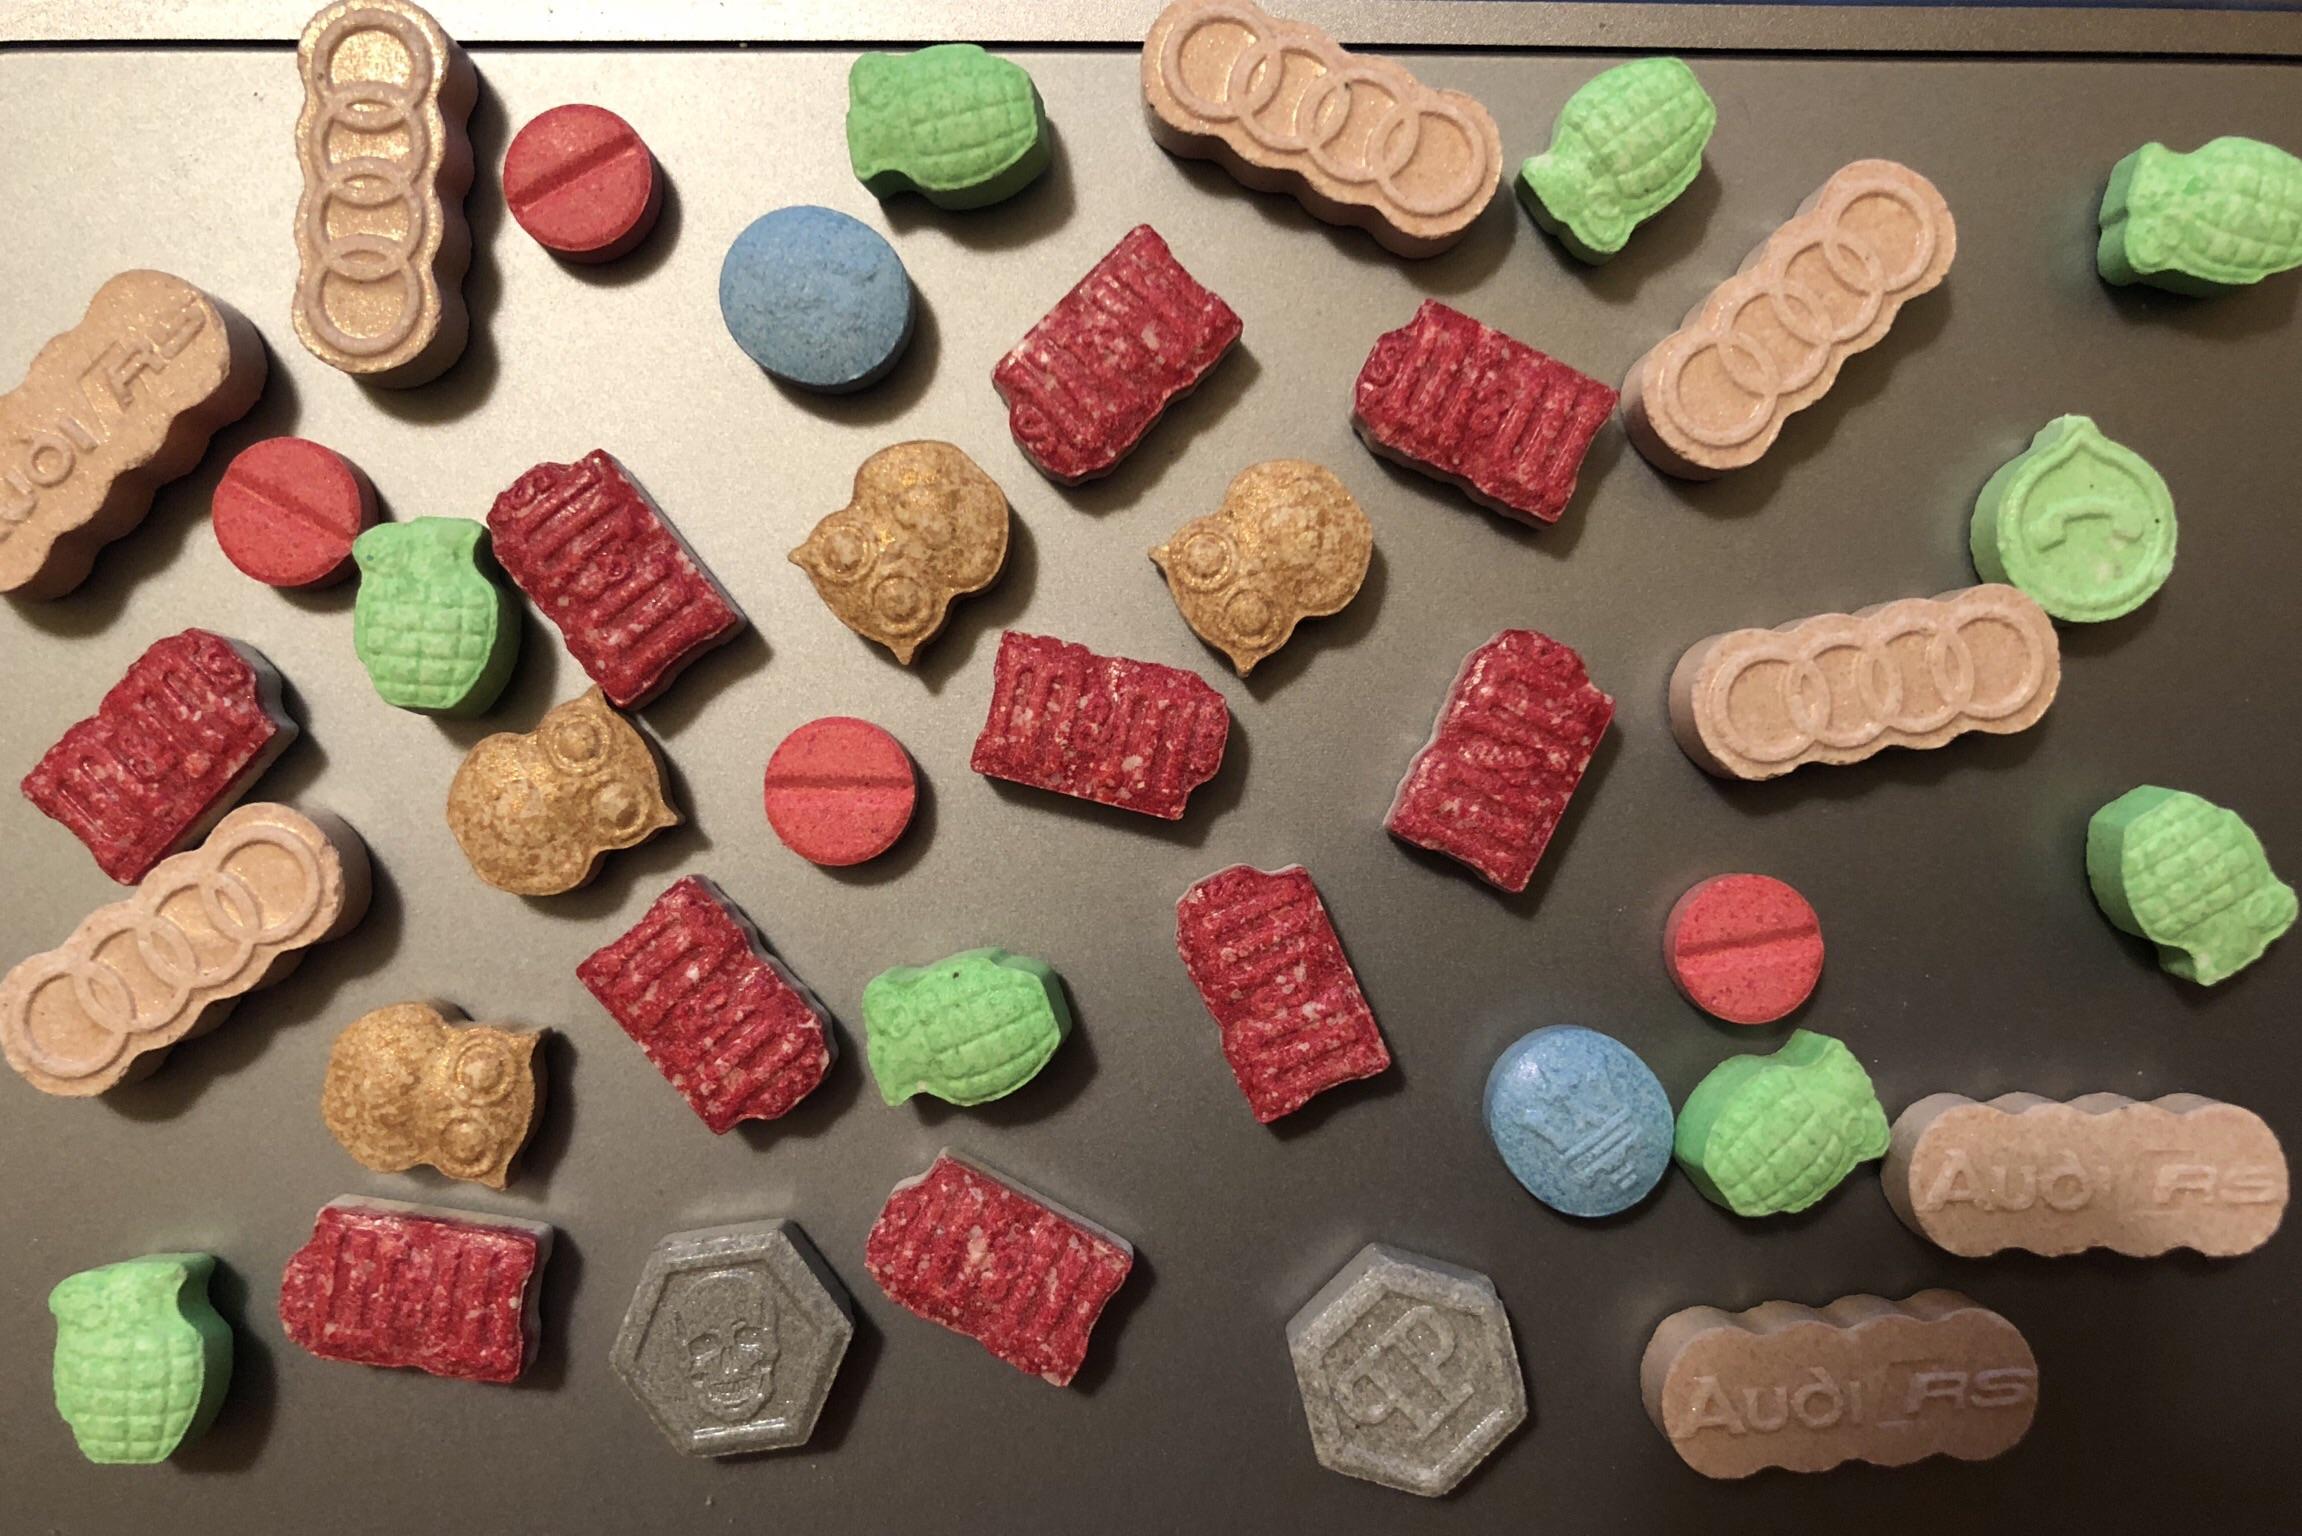 MDMA Ecstasy Mandy Drug Harm Reduction Drugs and Me 